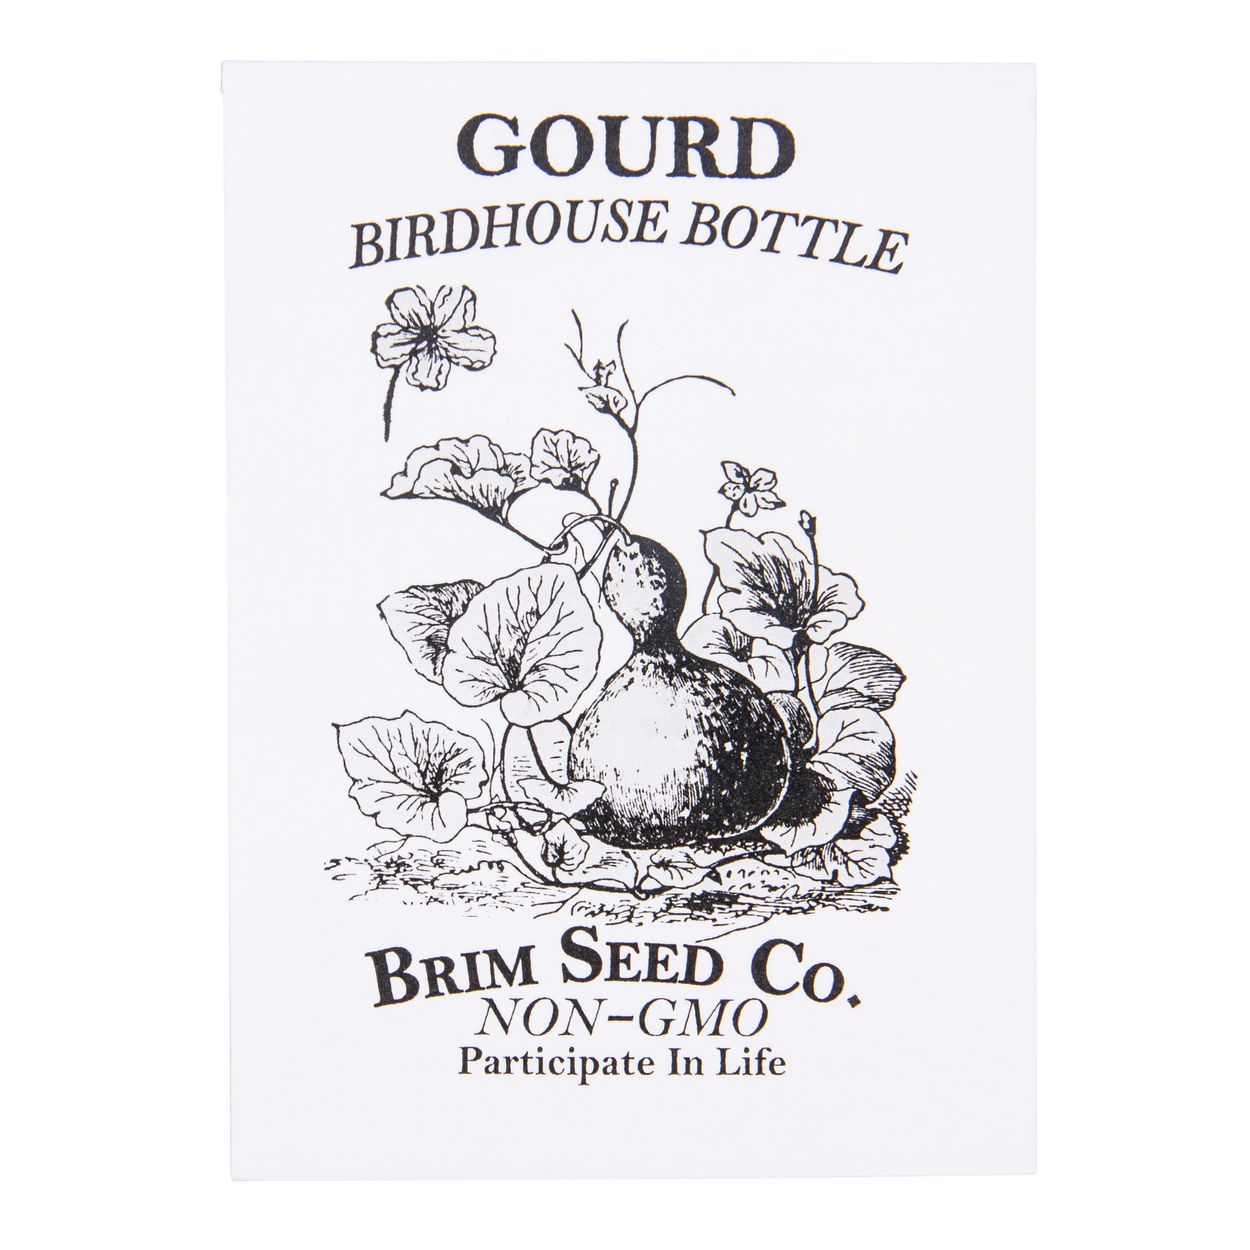 Brim Seed Co. - Birdhouse Bottle Gourd Seed